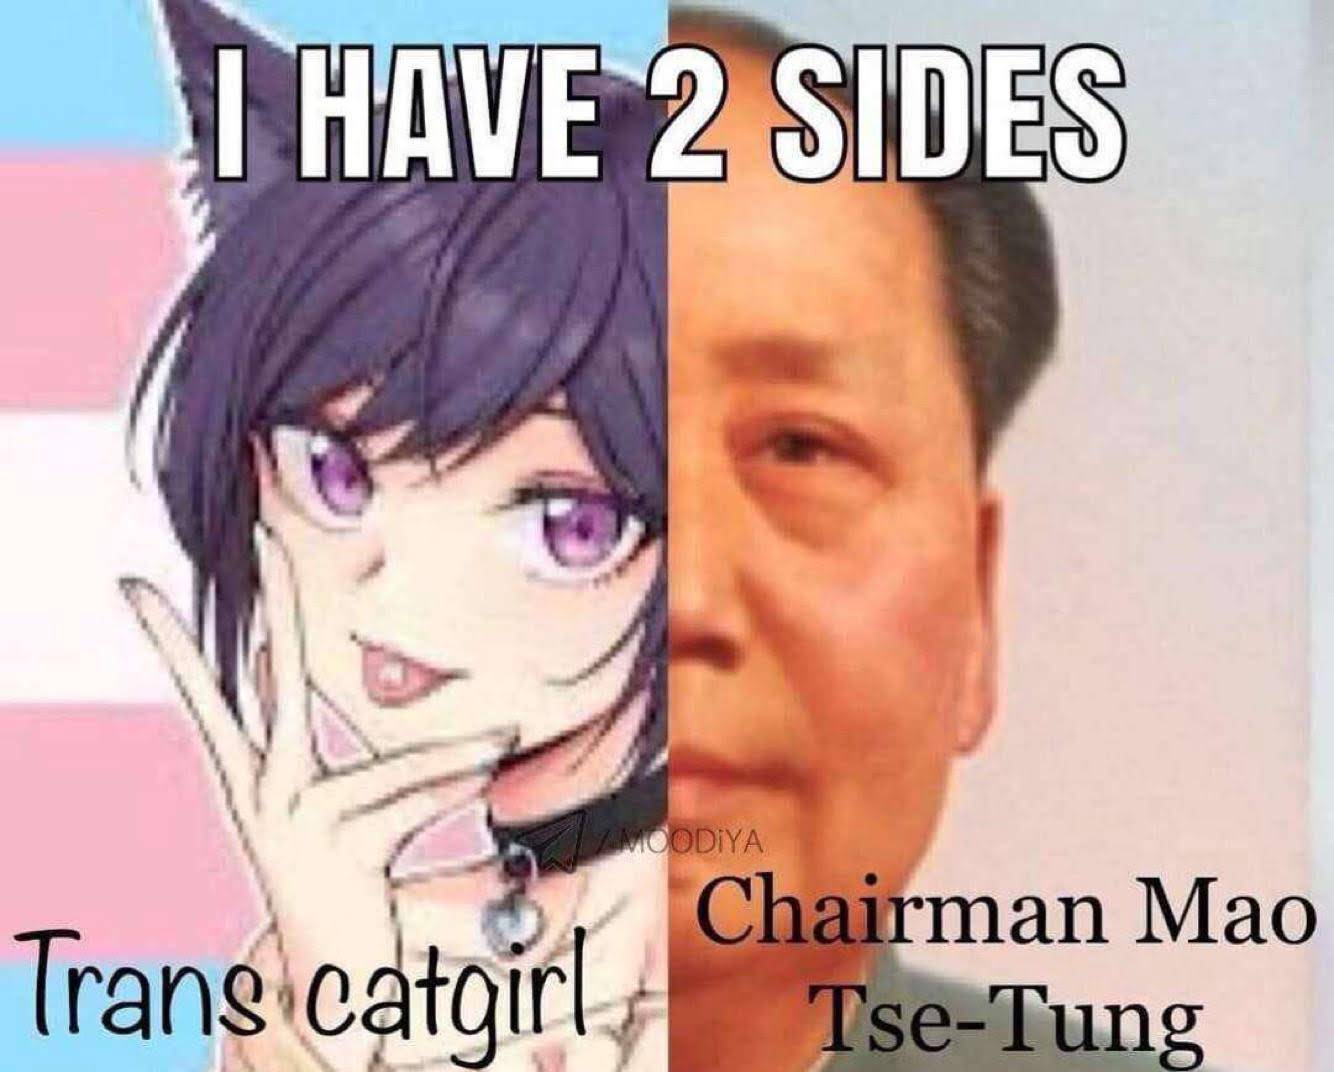 sex-memes - tiananmen - I Have 2 Sides Vamoodiya Trans catgirl Chairman Mao TseTung